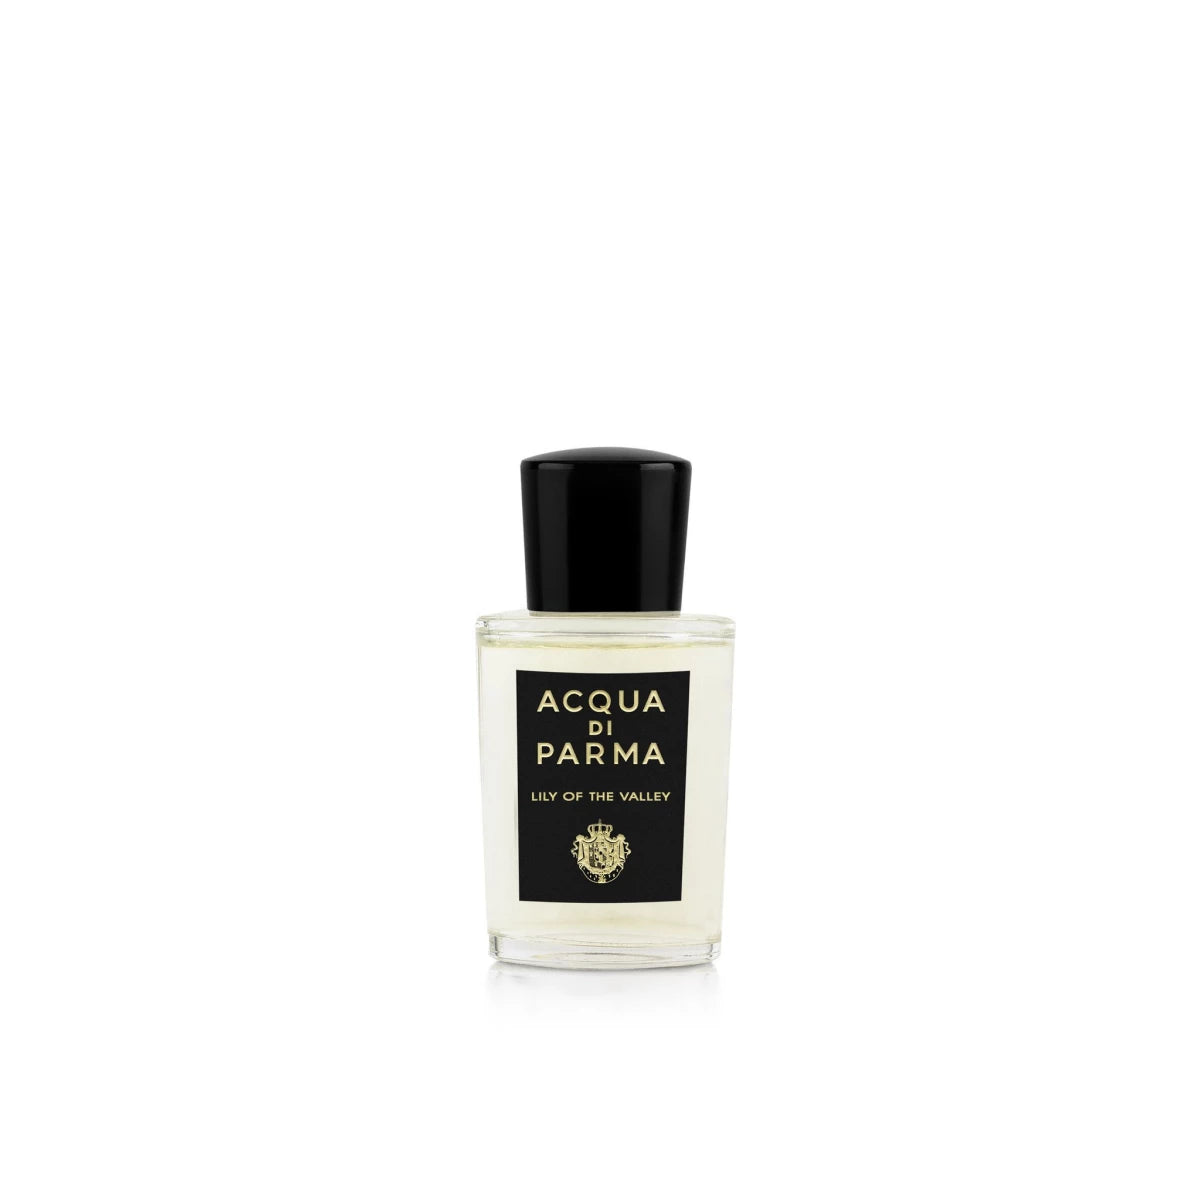 Acqua di Parma Lily of the valley Eau de Parfum